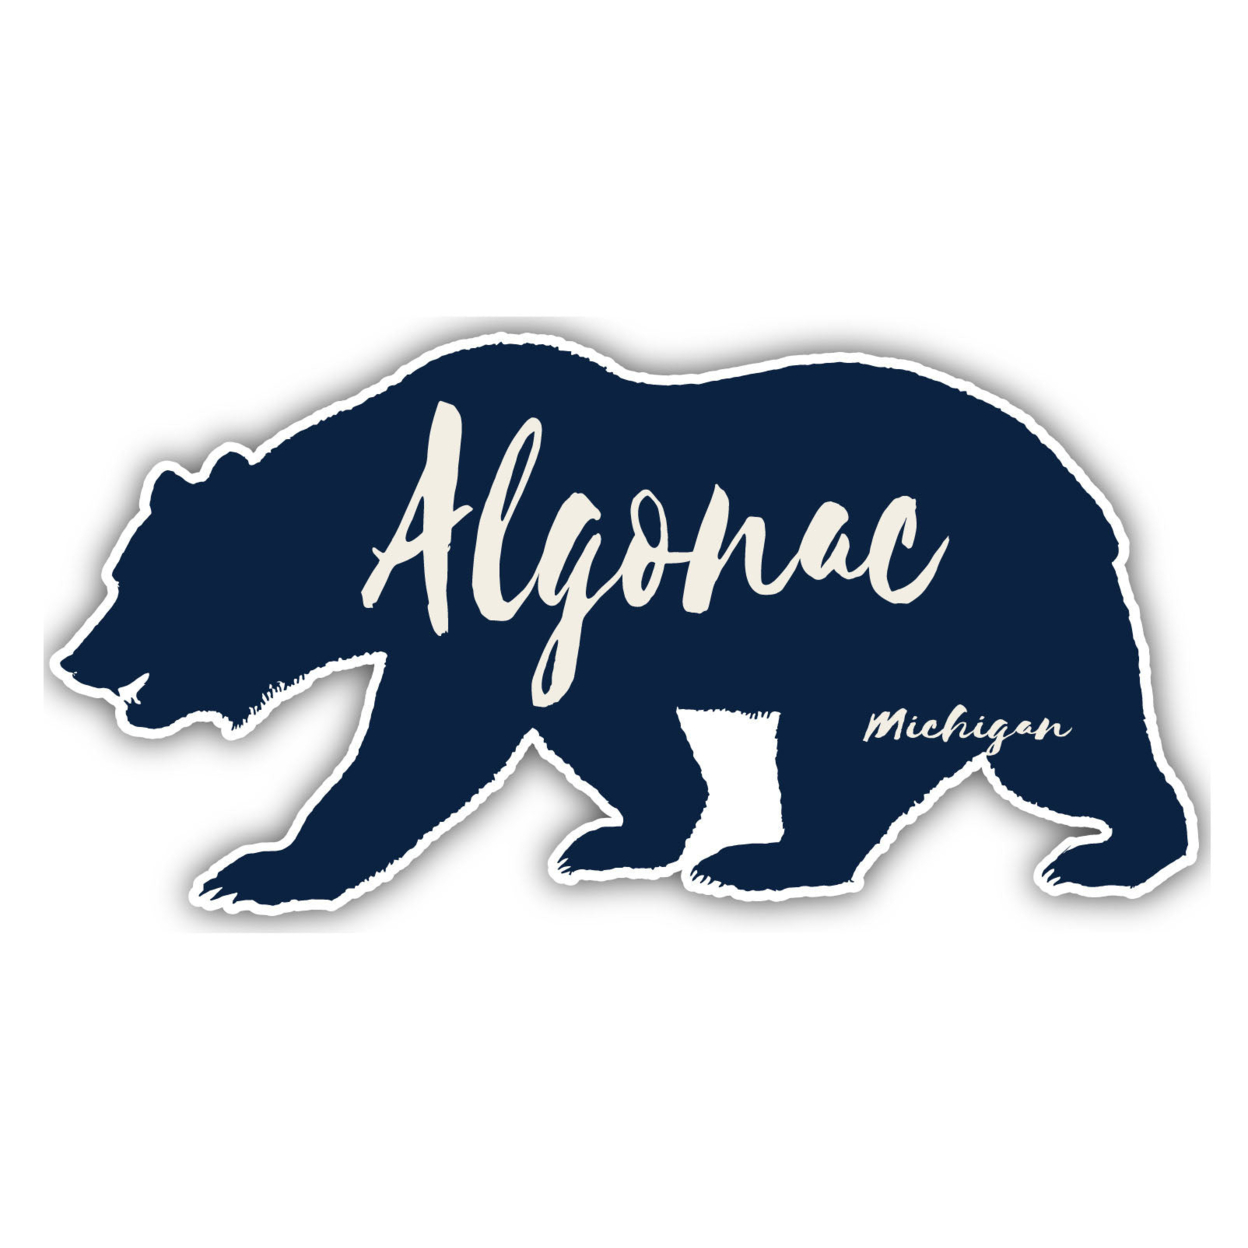 Algonac Michigan Souvenir Decorative Stickers (Choose Theme And Size) - 4-Pack, 8-Inch, Bear